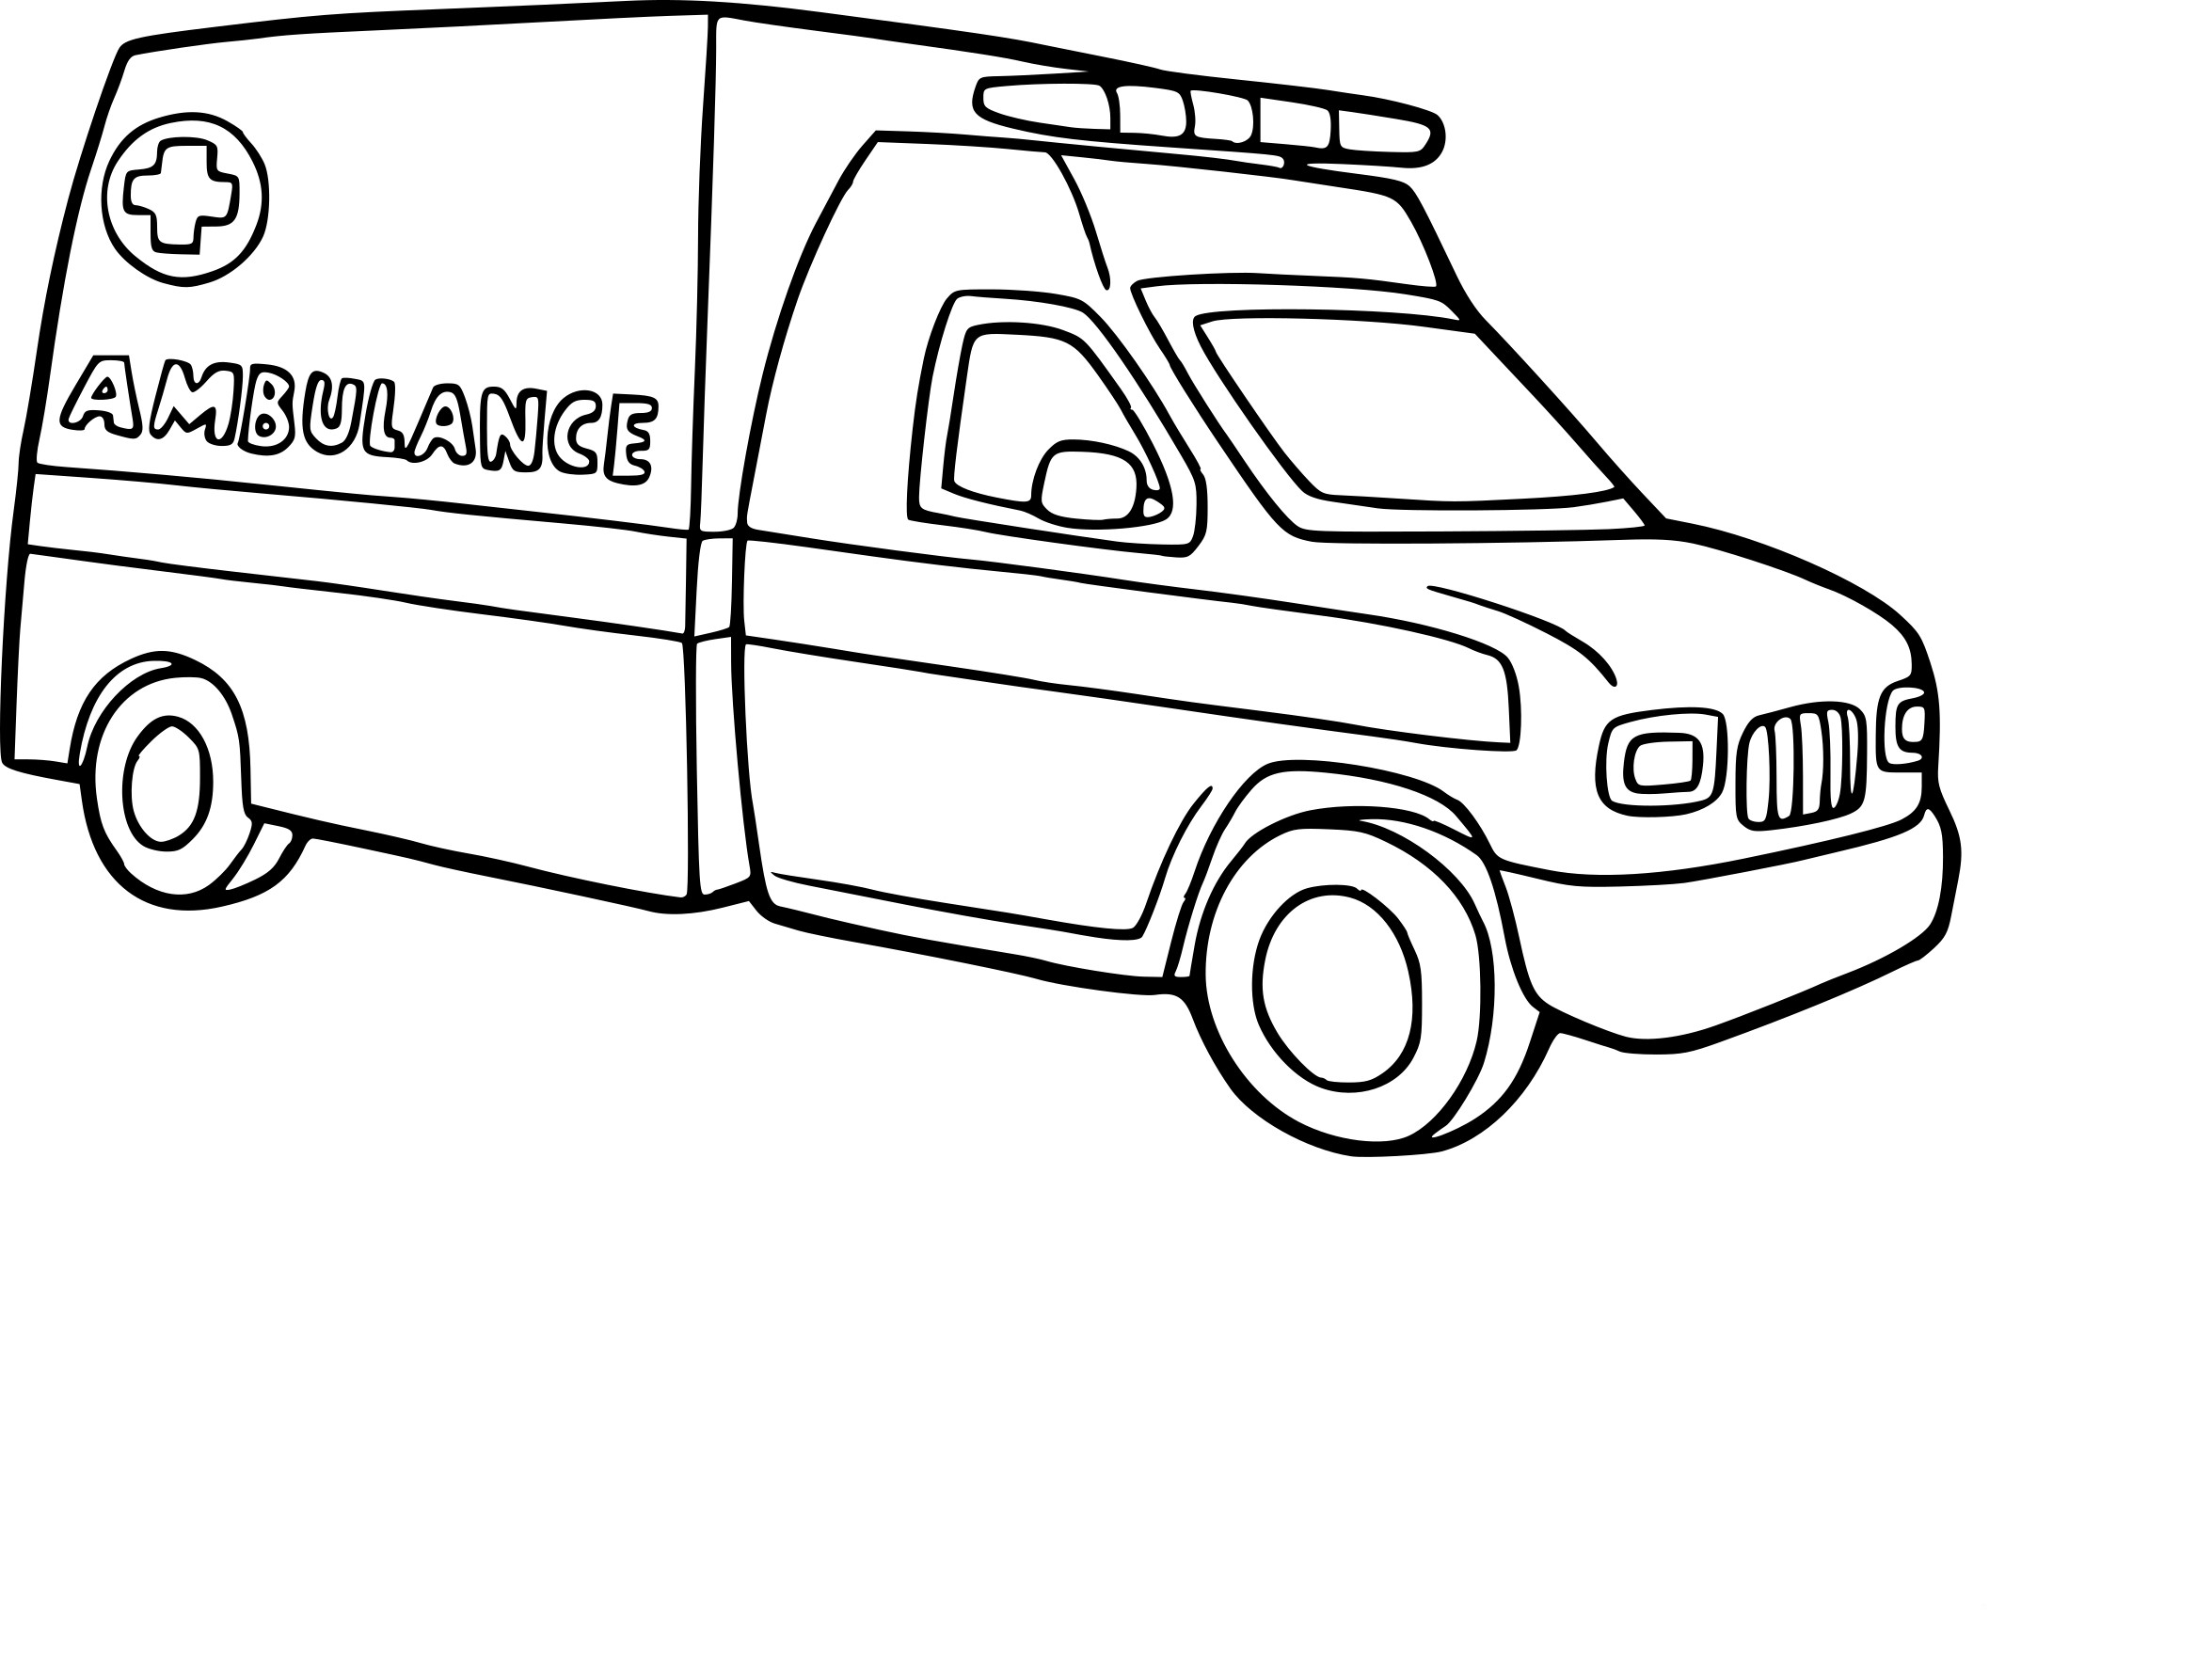 Ambulance Truck coloring page